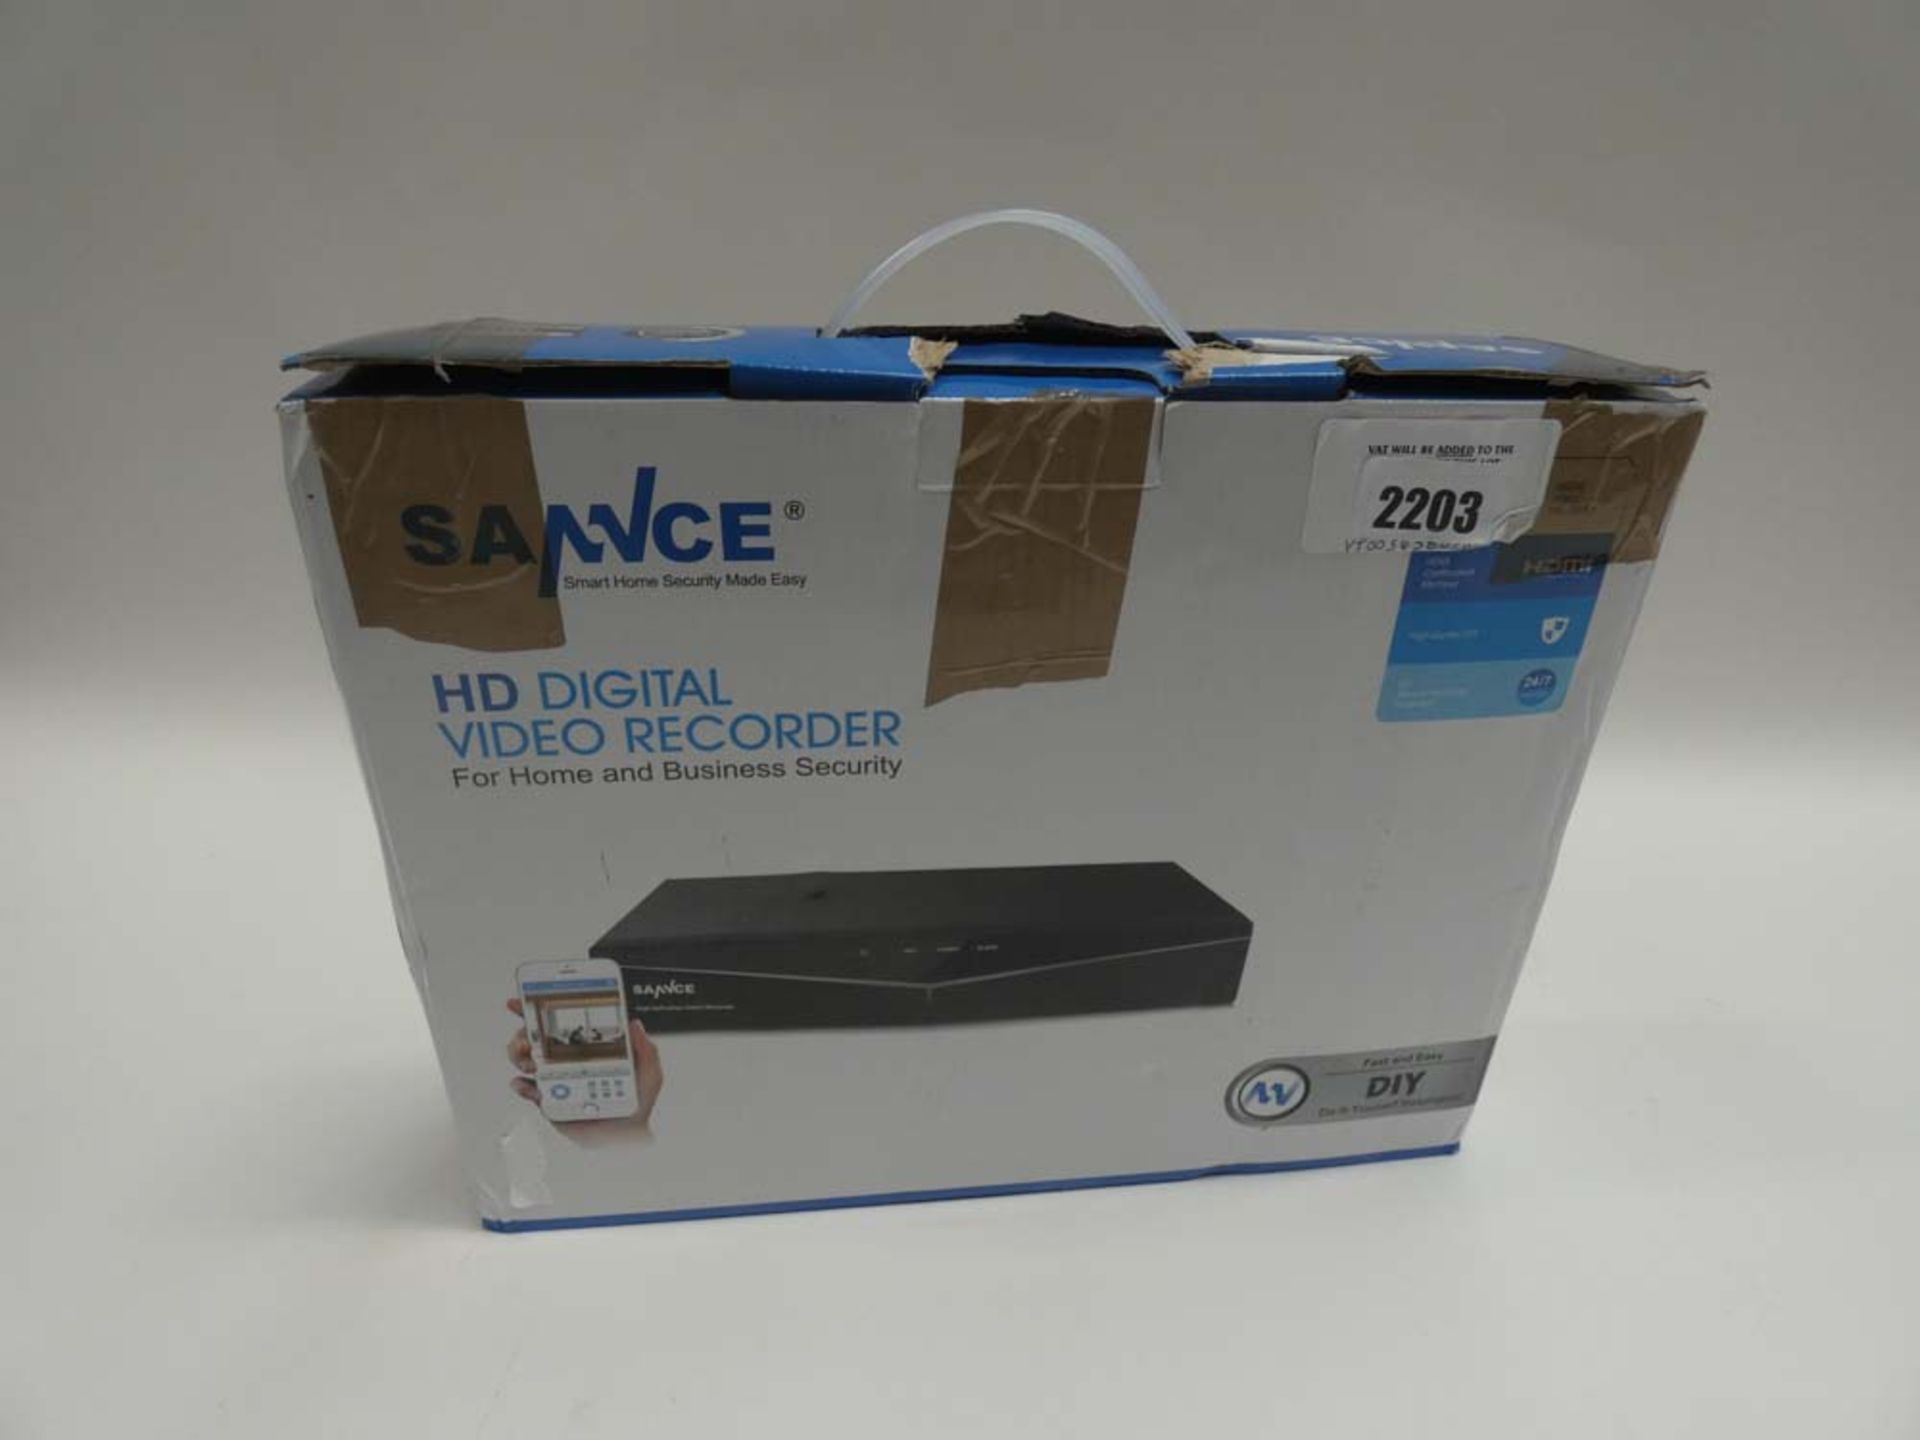 SAnnce HD digital video recorder